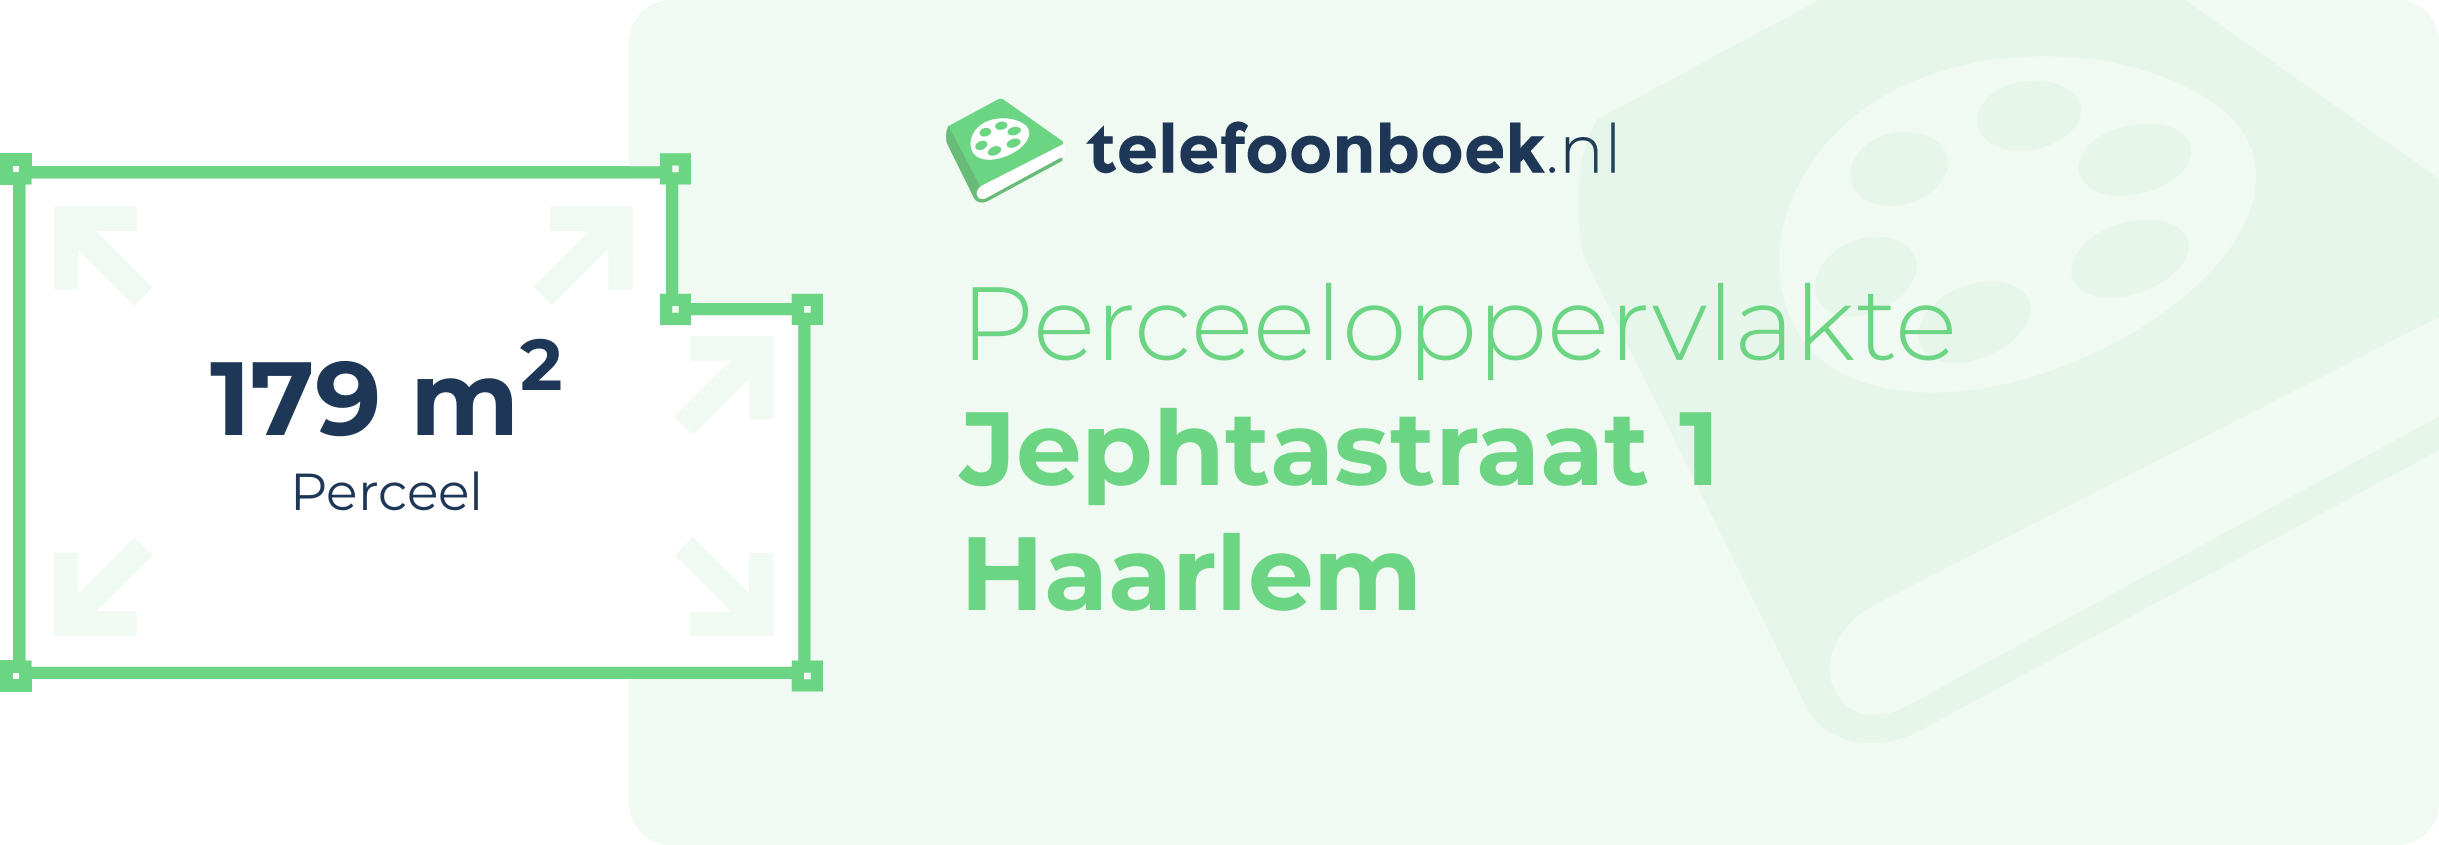 Perceeloppervlakte Jephtastraat 1 Haarlem